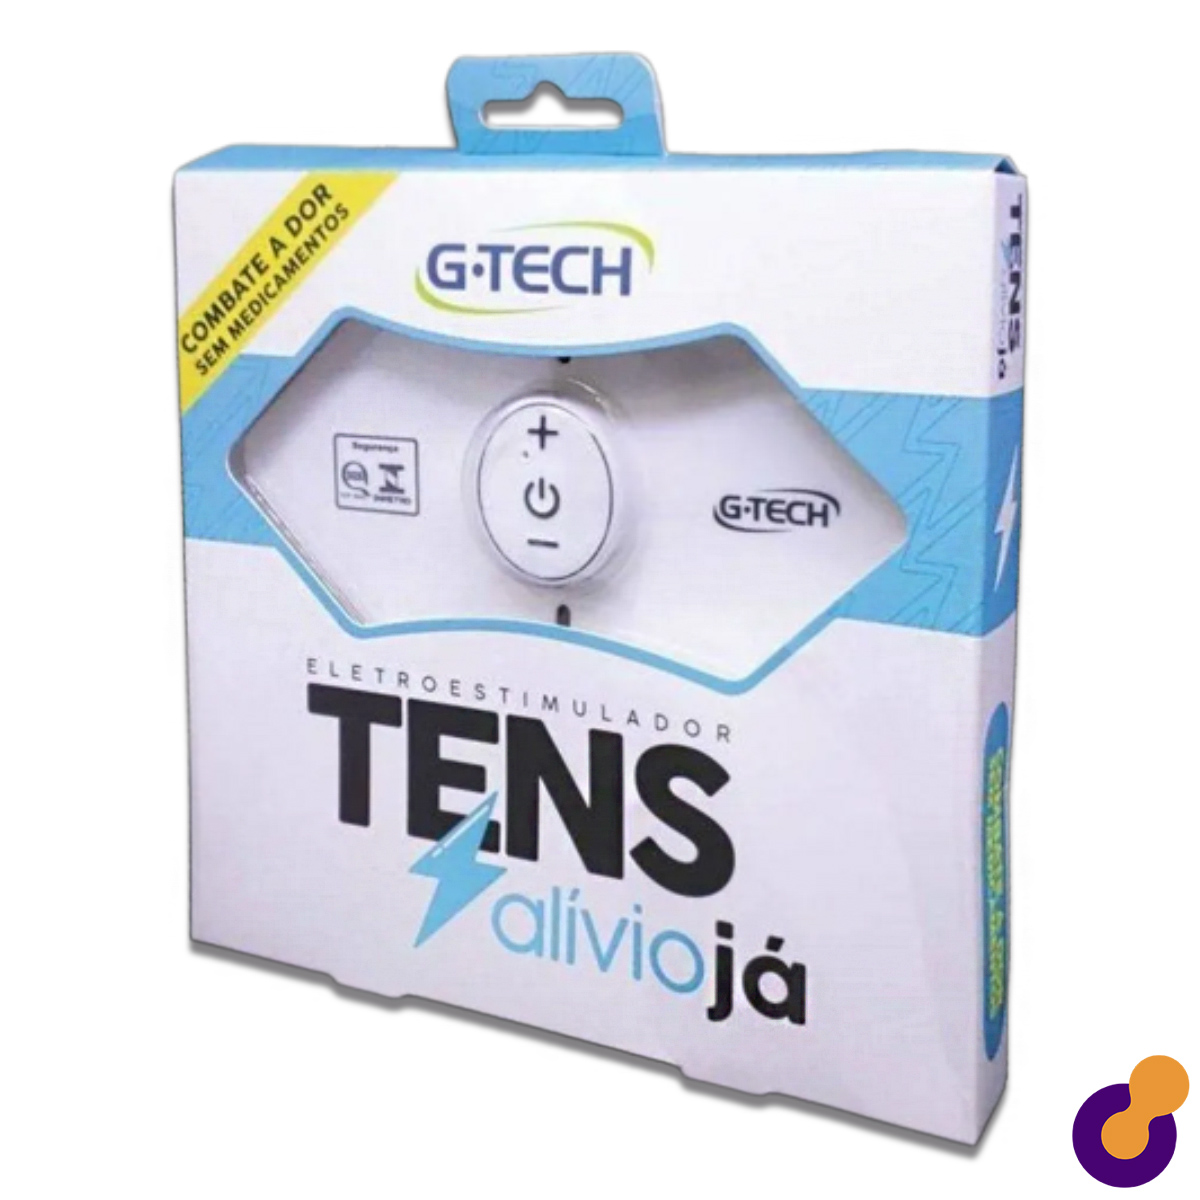 Eletroestimulador Tens Alívio Já - G-Tech